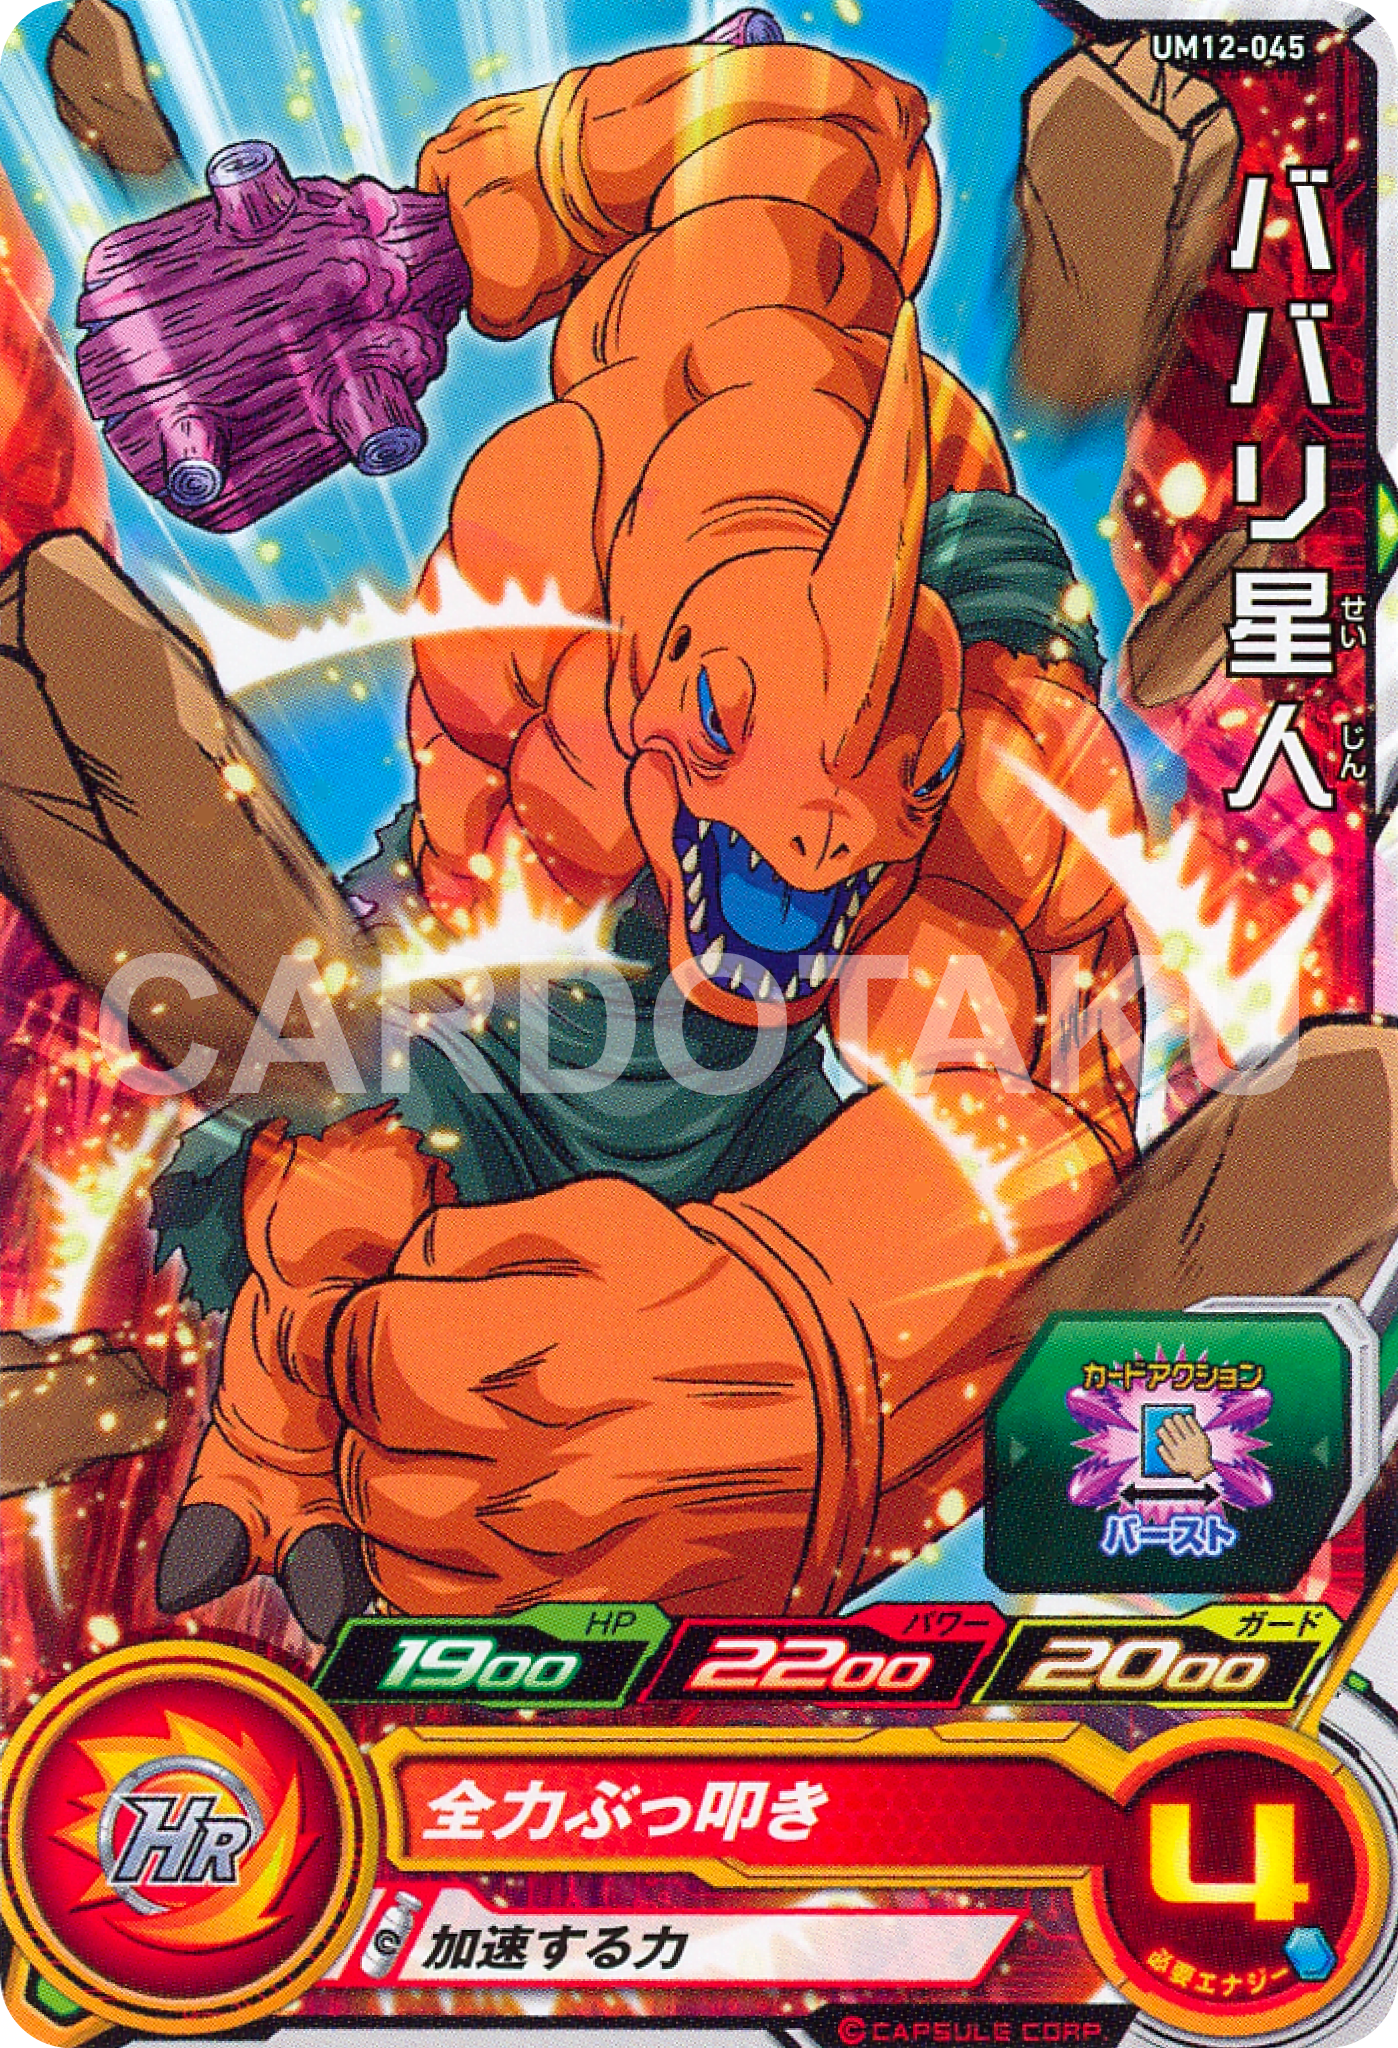 SUPER DRAGON BALL HEROES UM12-045 Common card Babari Seijin